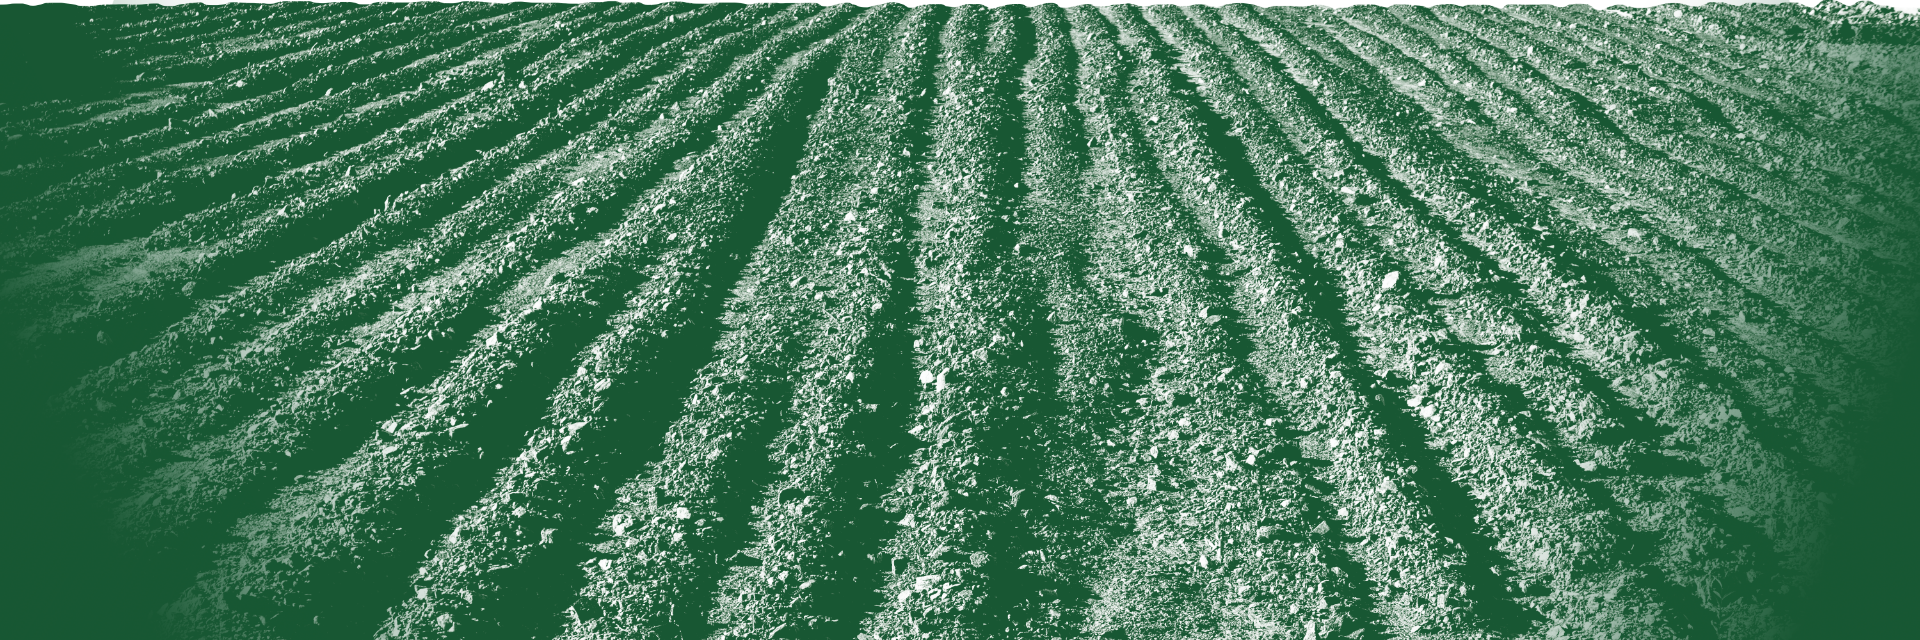 Green Soil Image Background